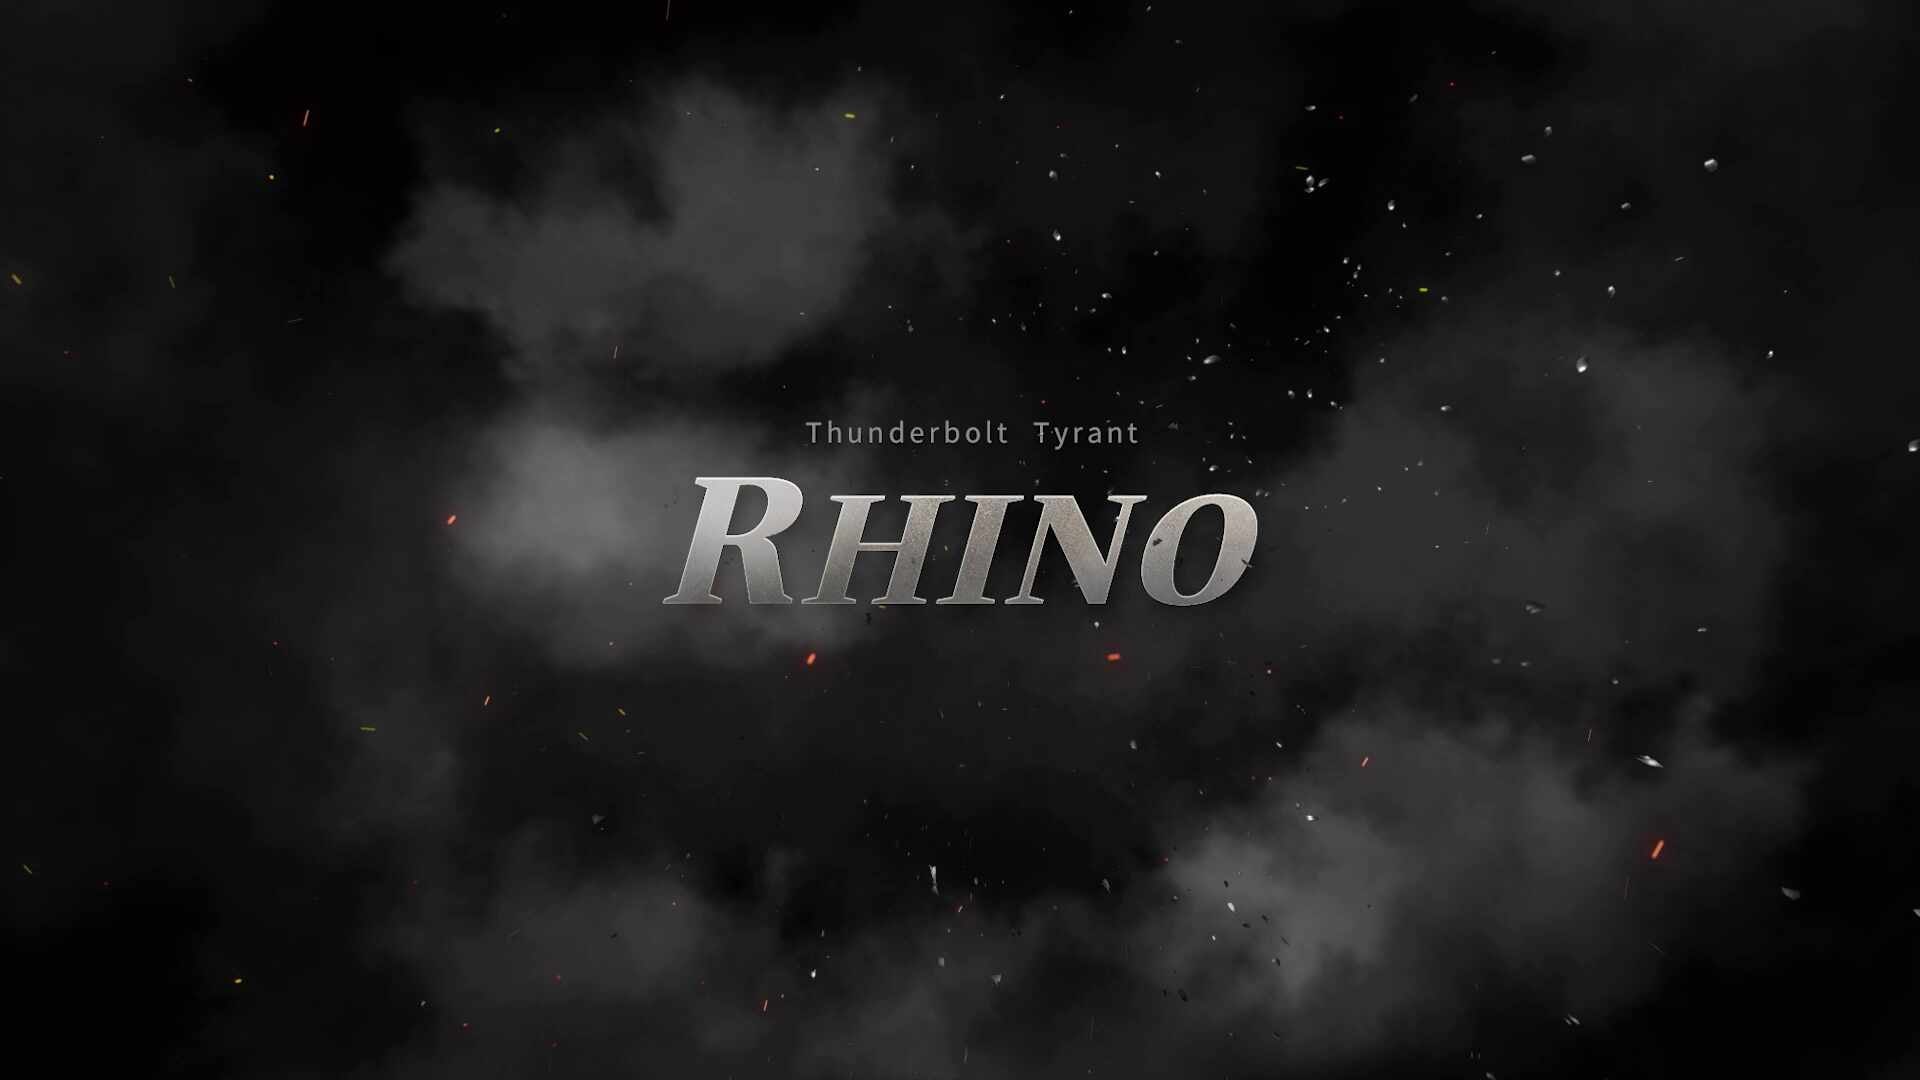 Hundred Soul : The Last Savior: event - [Notice] Rhino Advent - Thunderbolt Tyrant video cover image 0